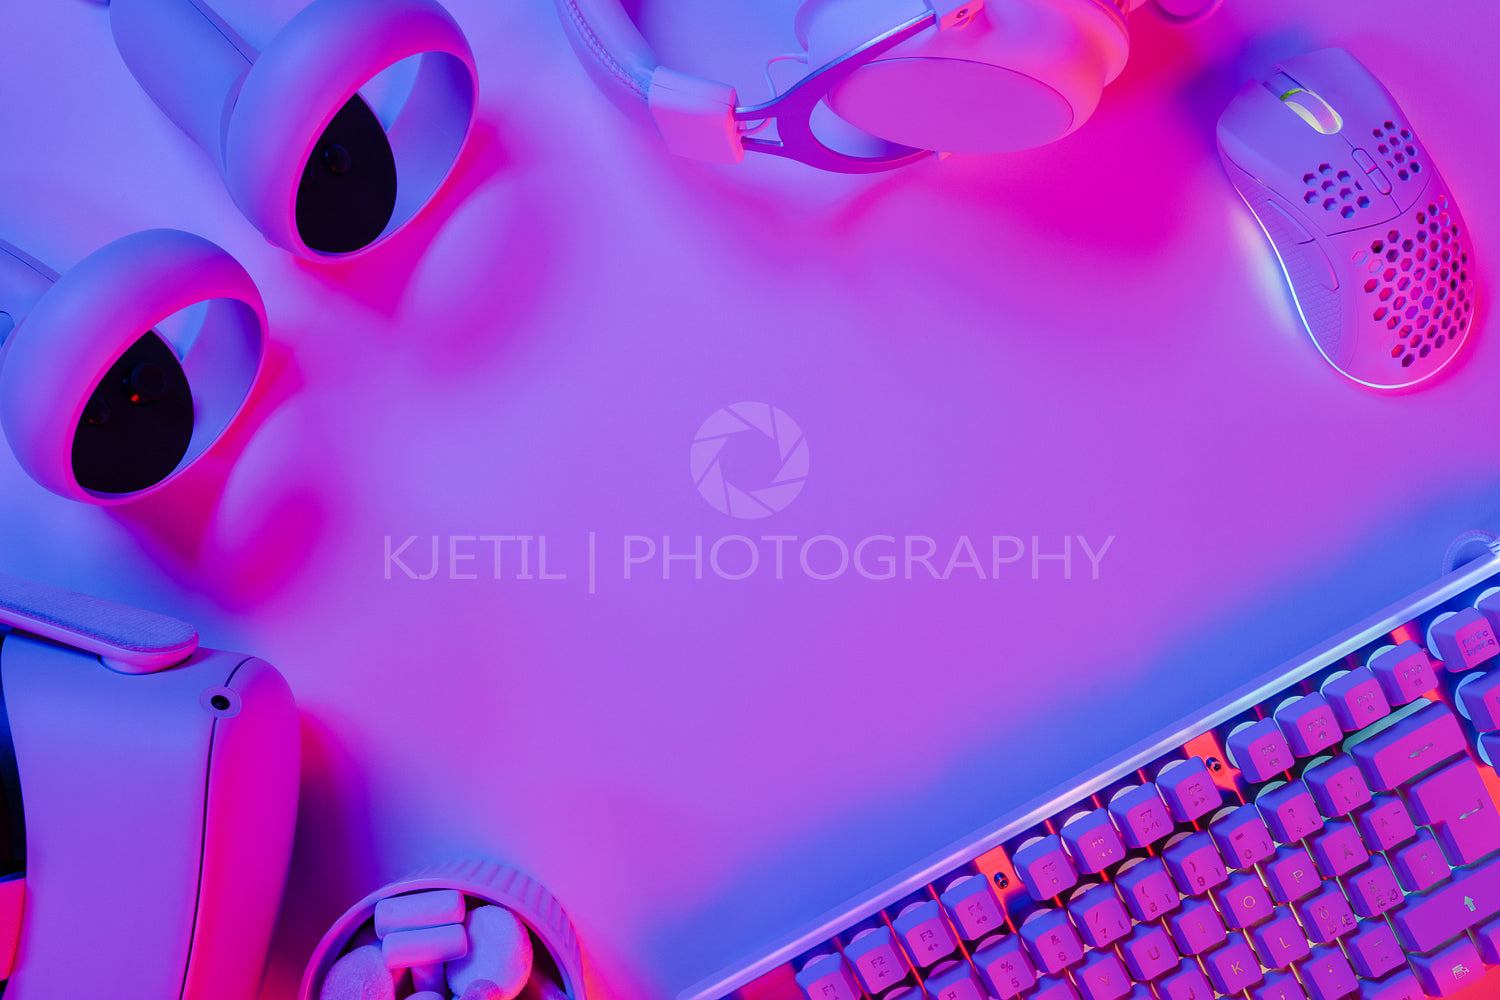 Illuminated keyboard and gaming gadgets on desk